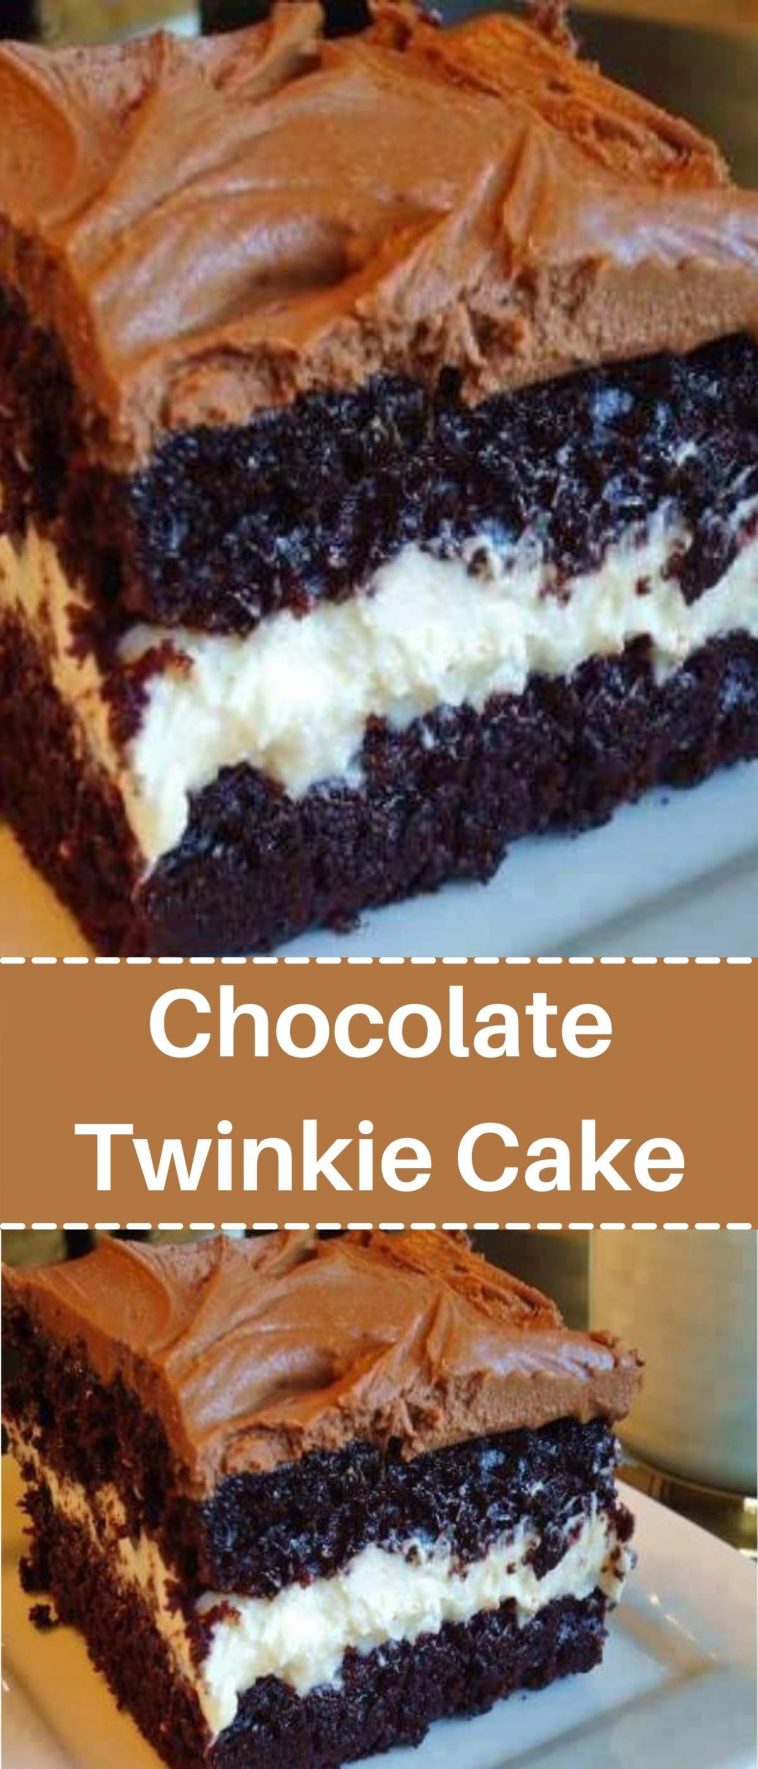 Chocolate Twinkie Cake